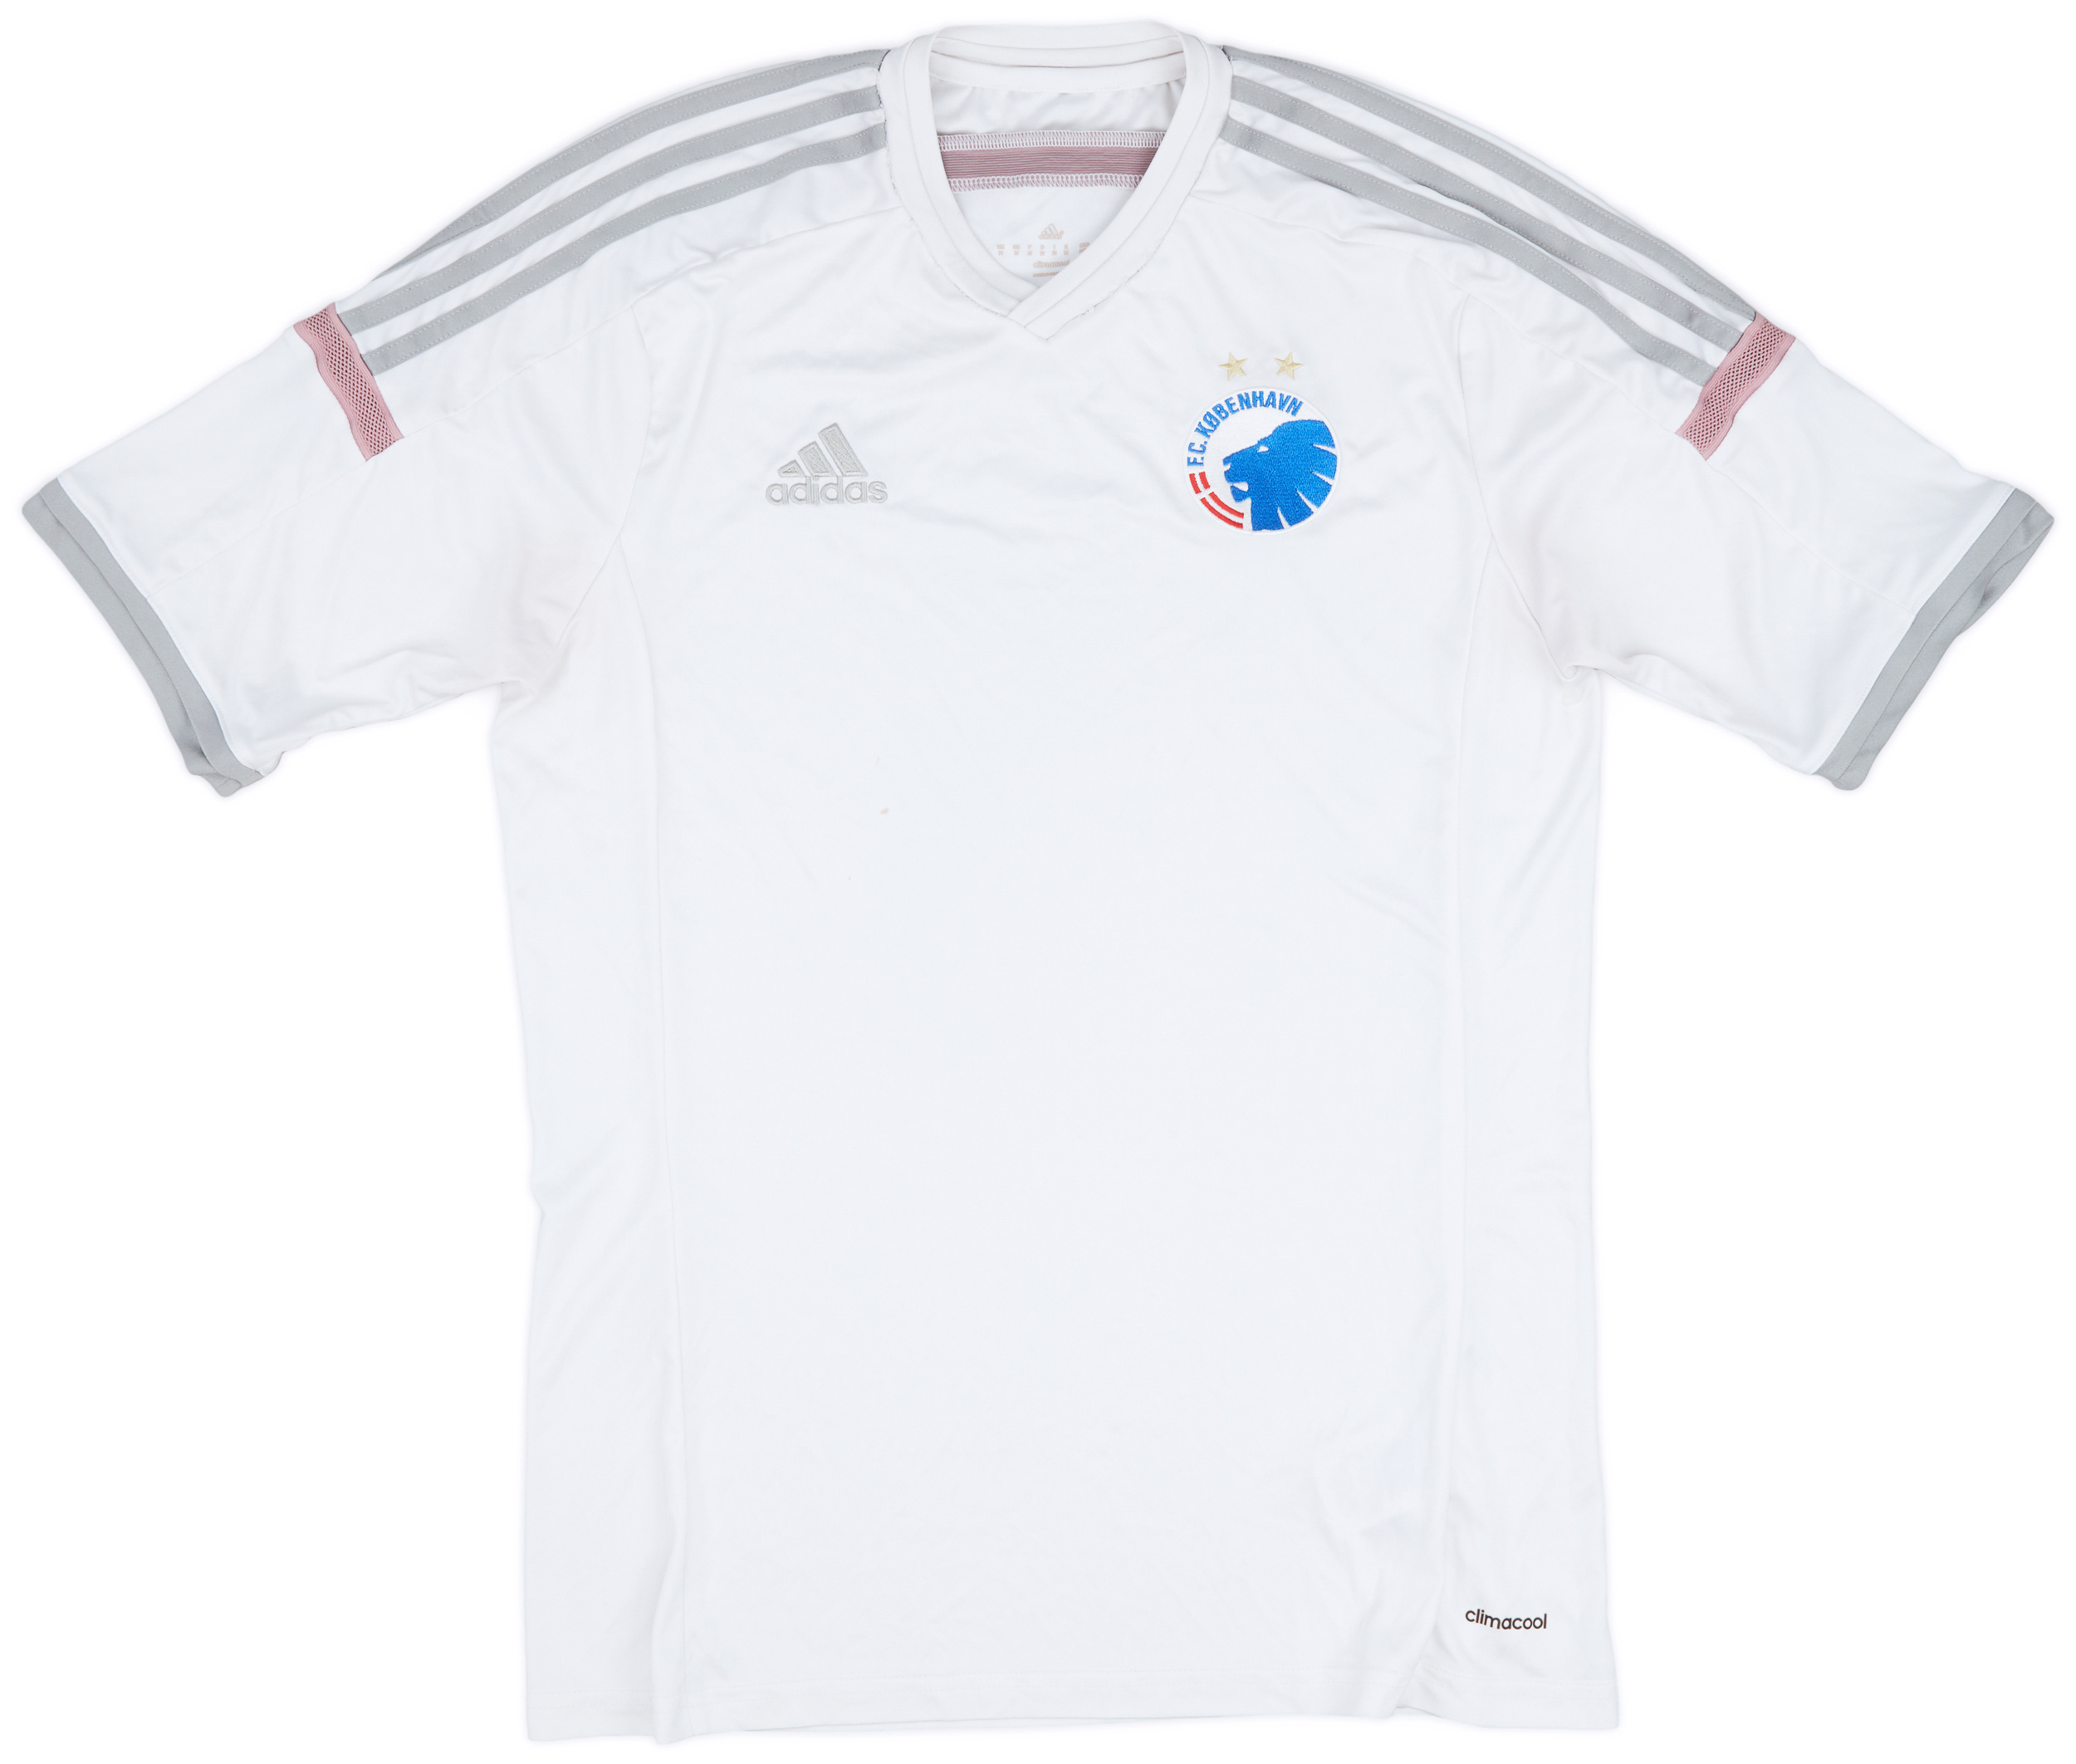 København Away football shirt 2010 - 2011.